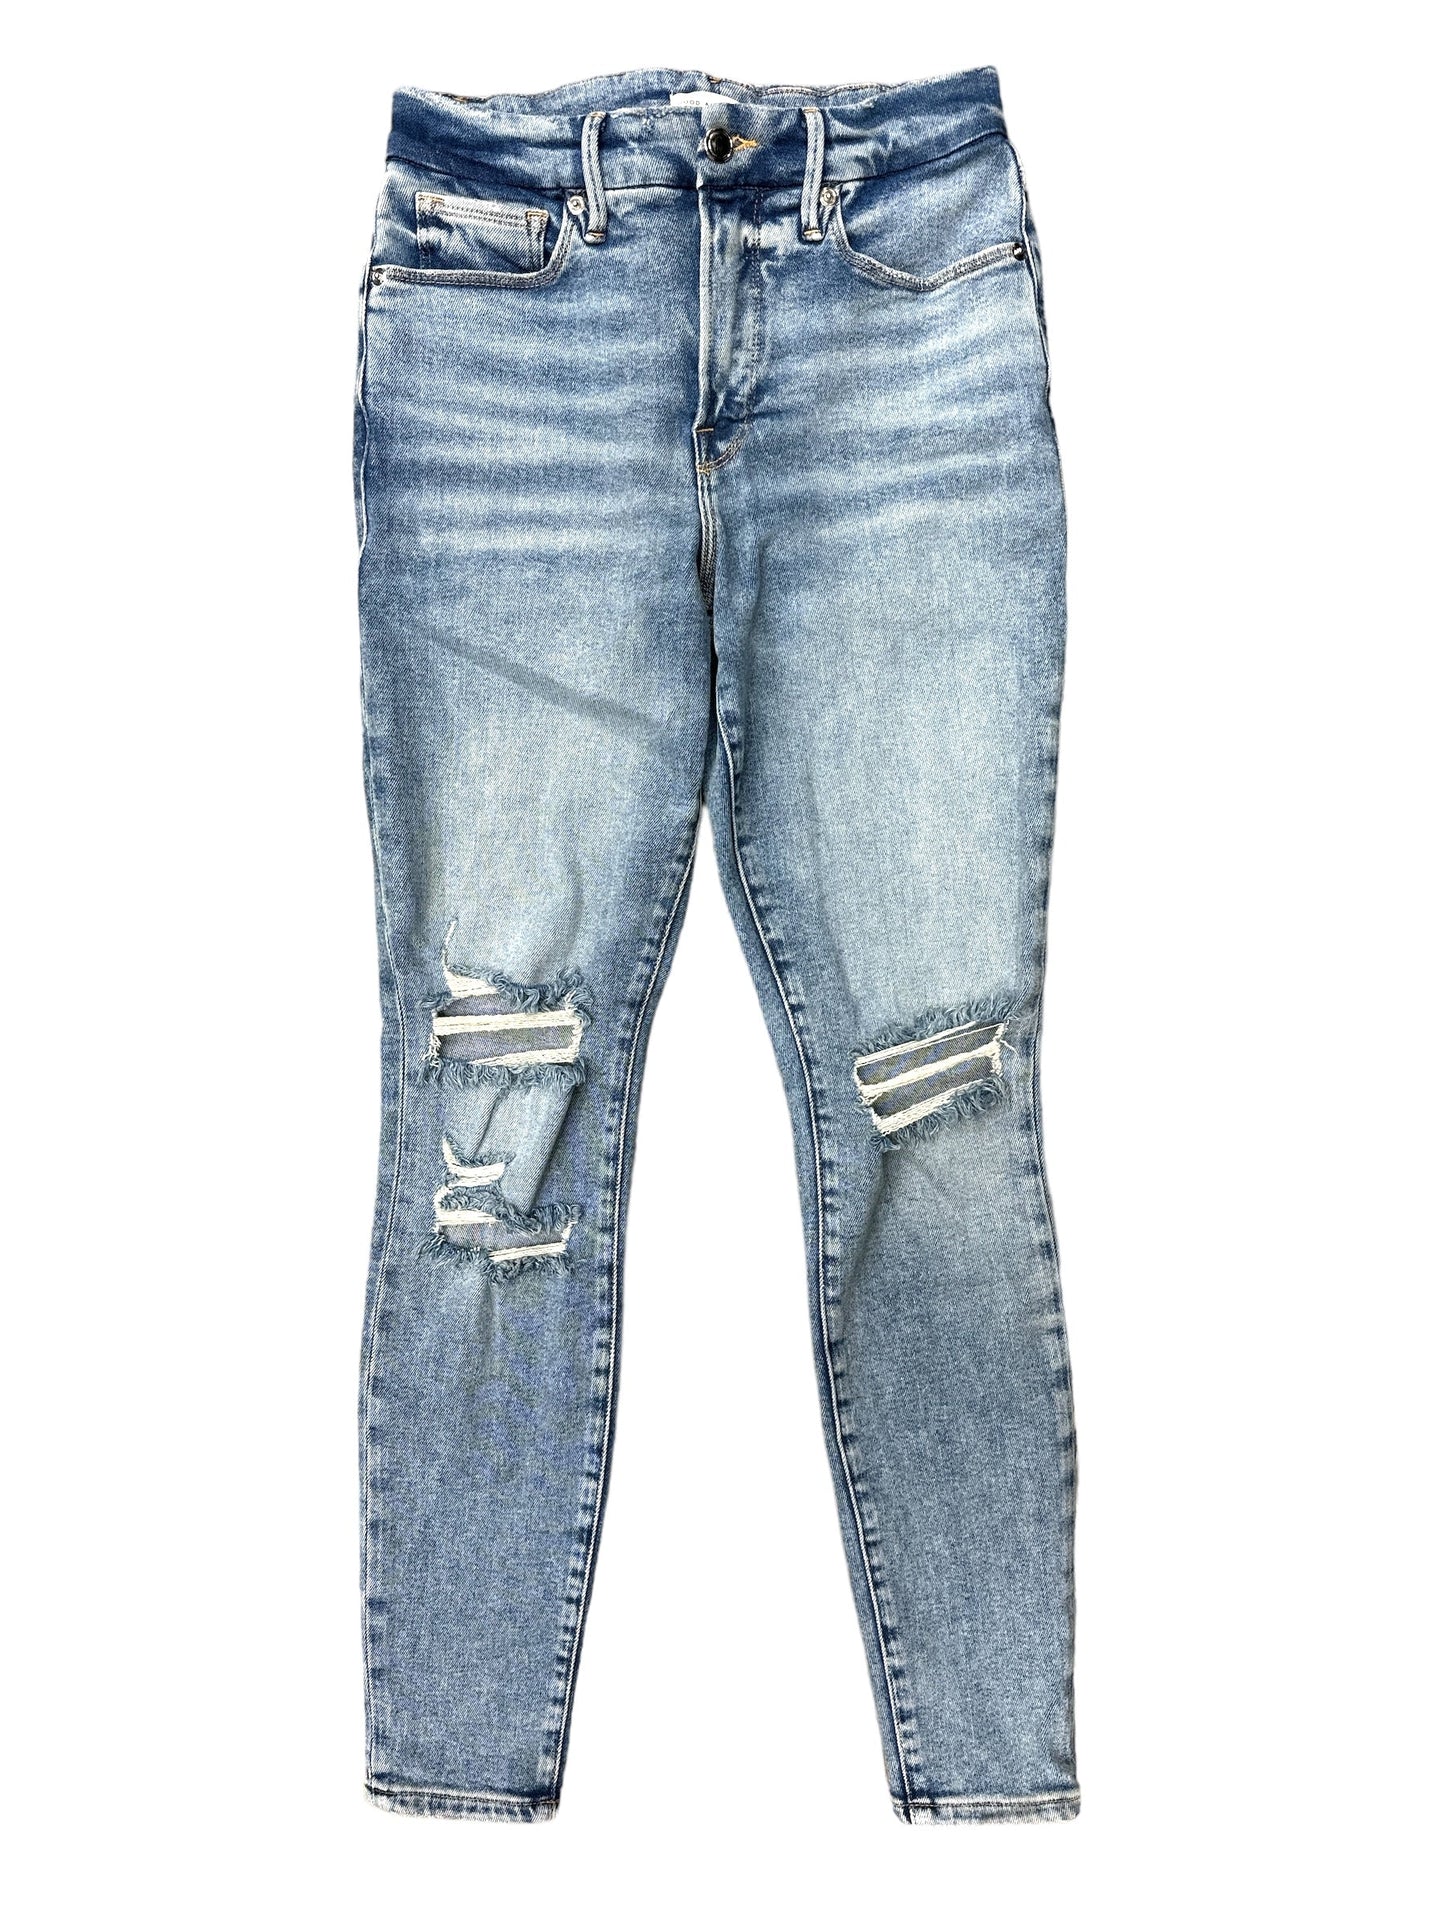 Blue Denim Jeans Designer Good American, Size 6